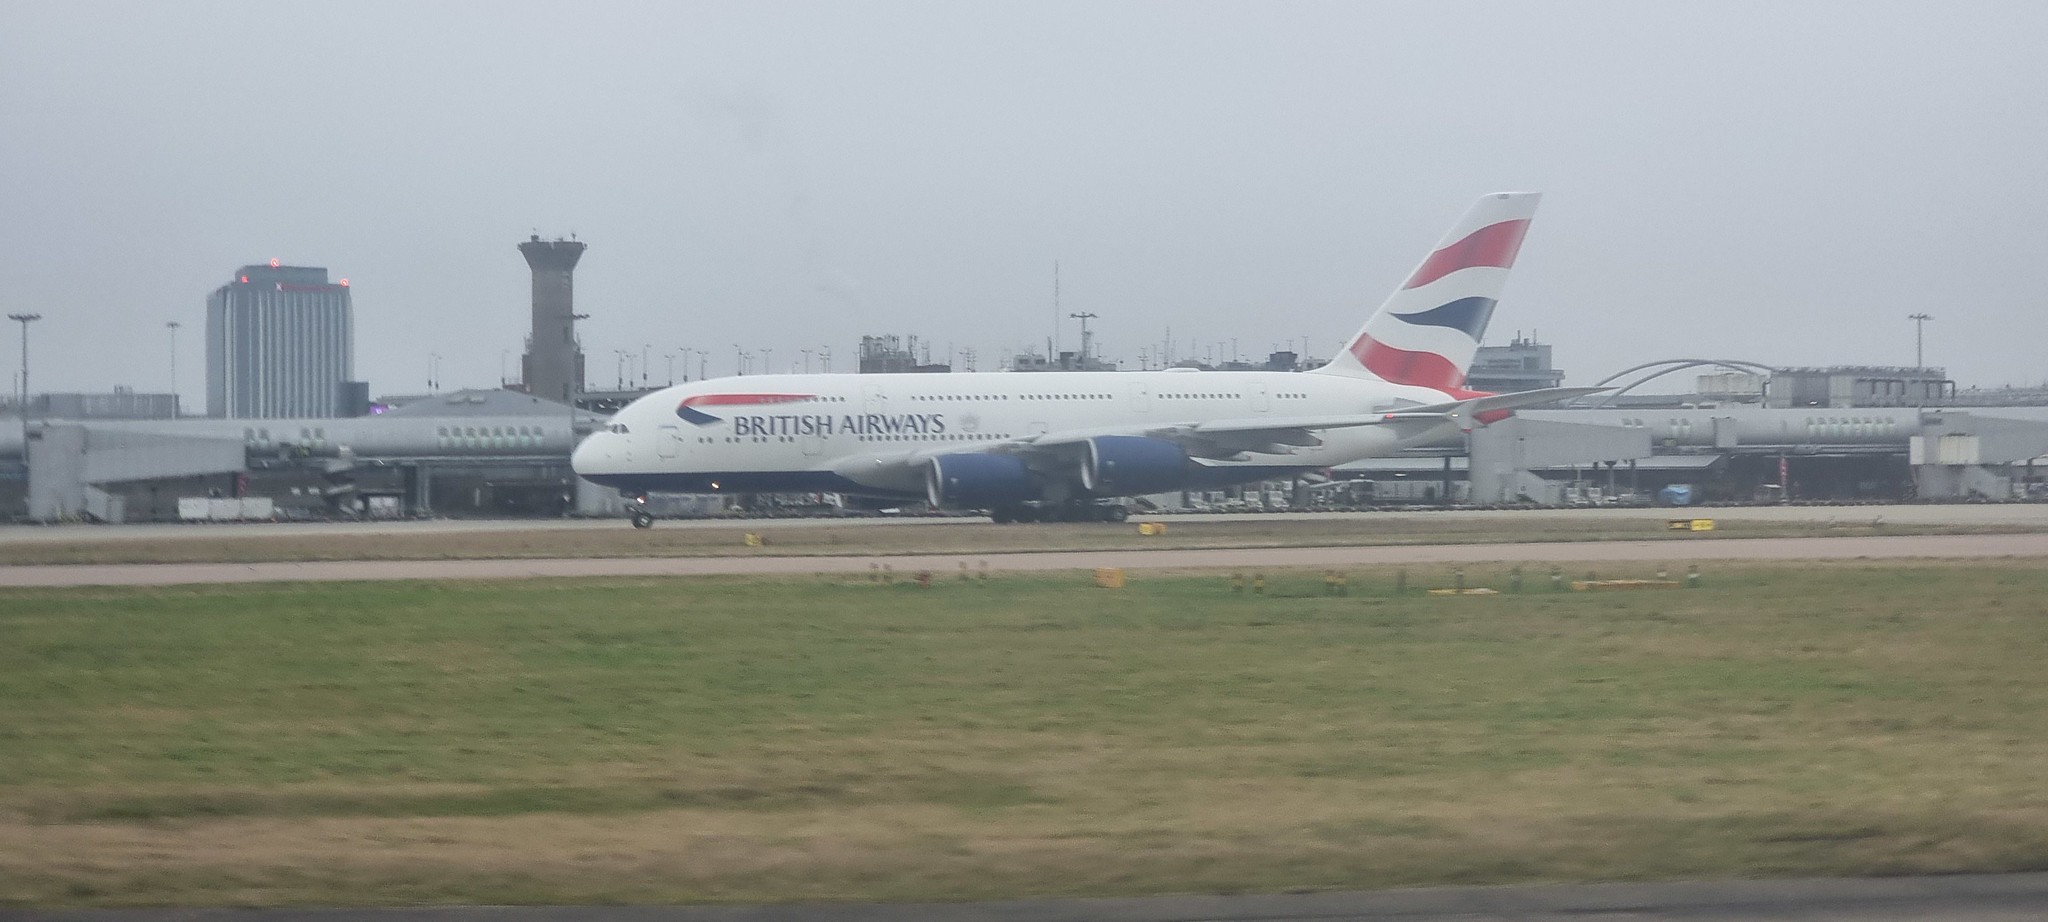 A BA A380 taxiing at Heathrow LHR